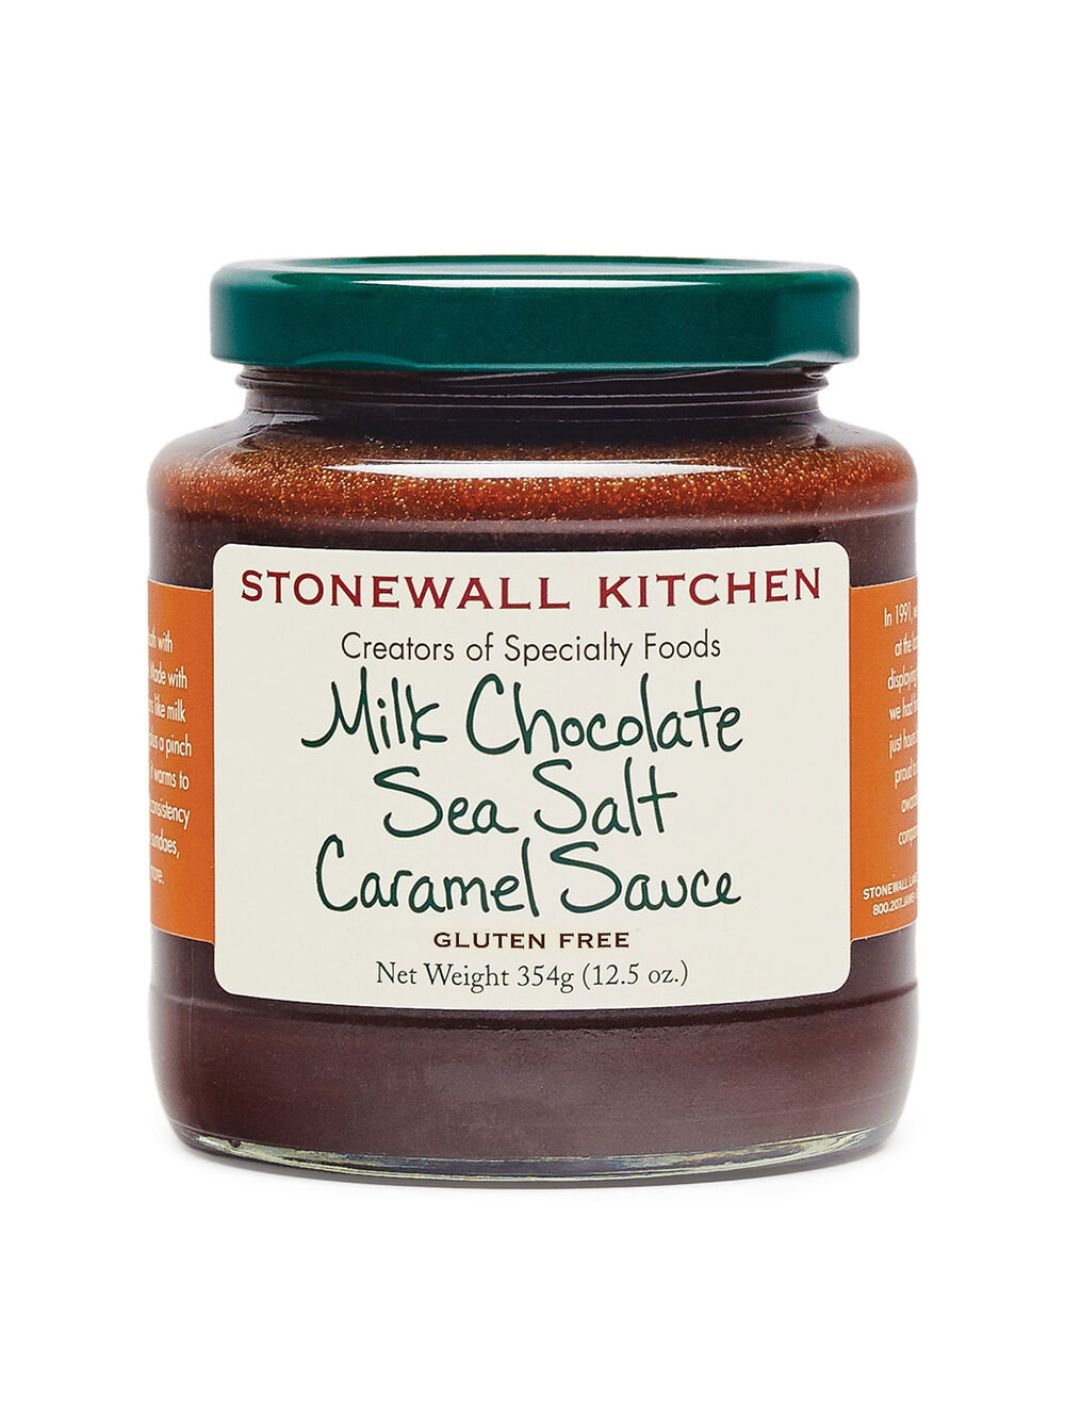 Milk Chocolate Sea Salt Caramel Sauce 12.5 oz.